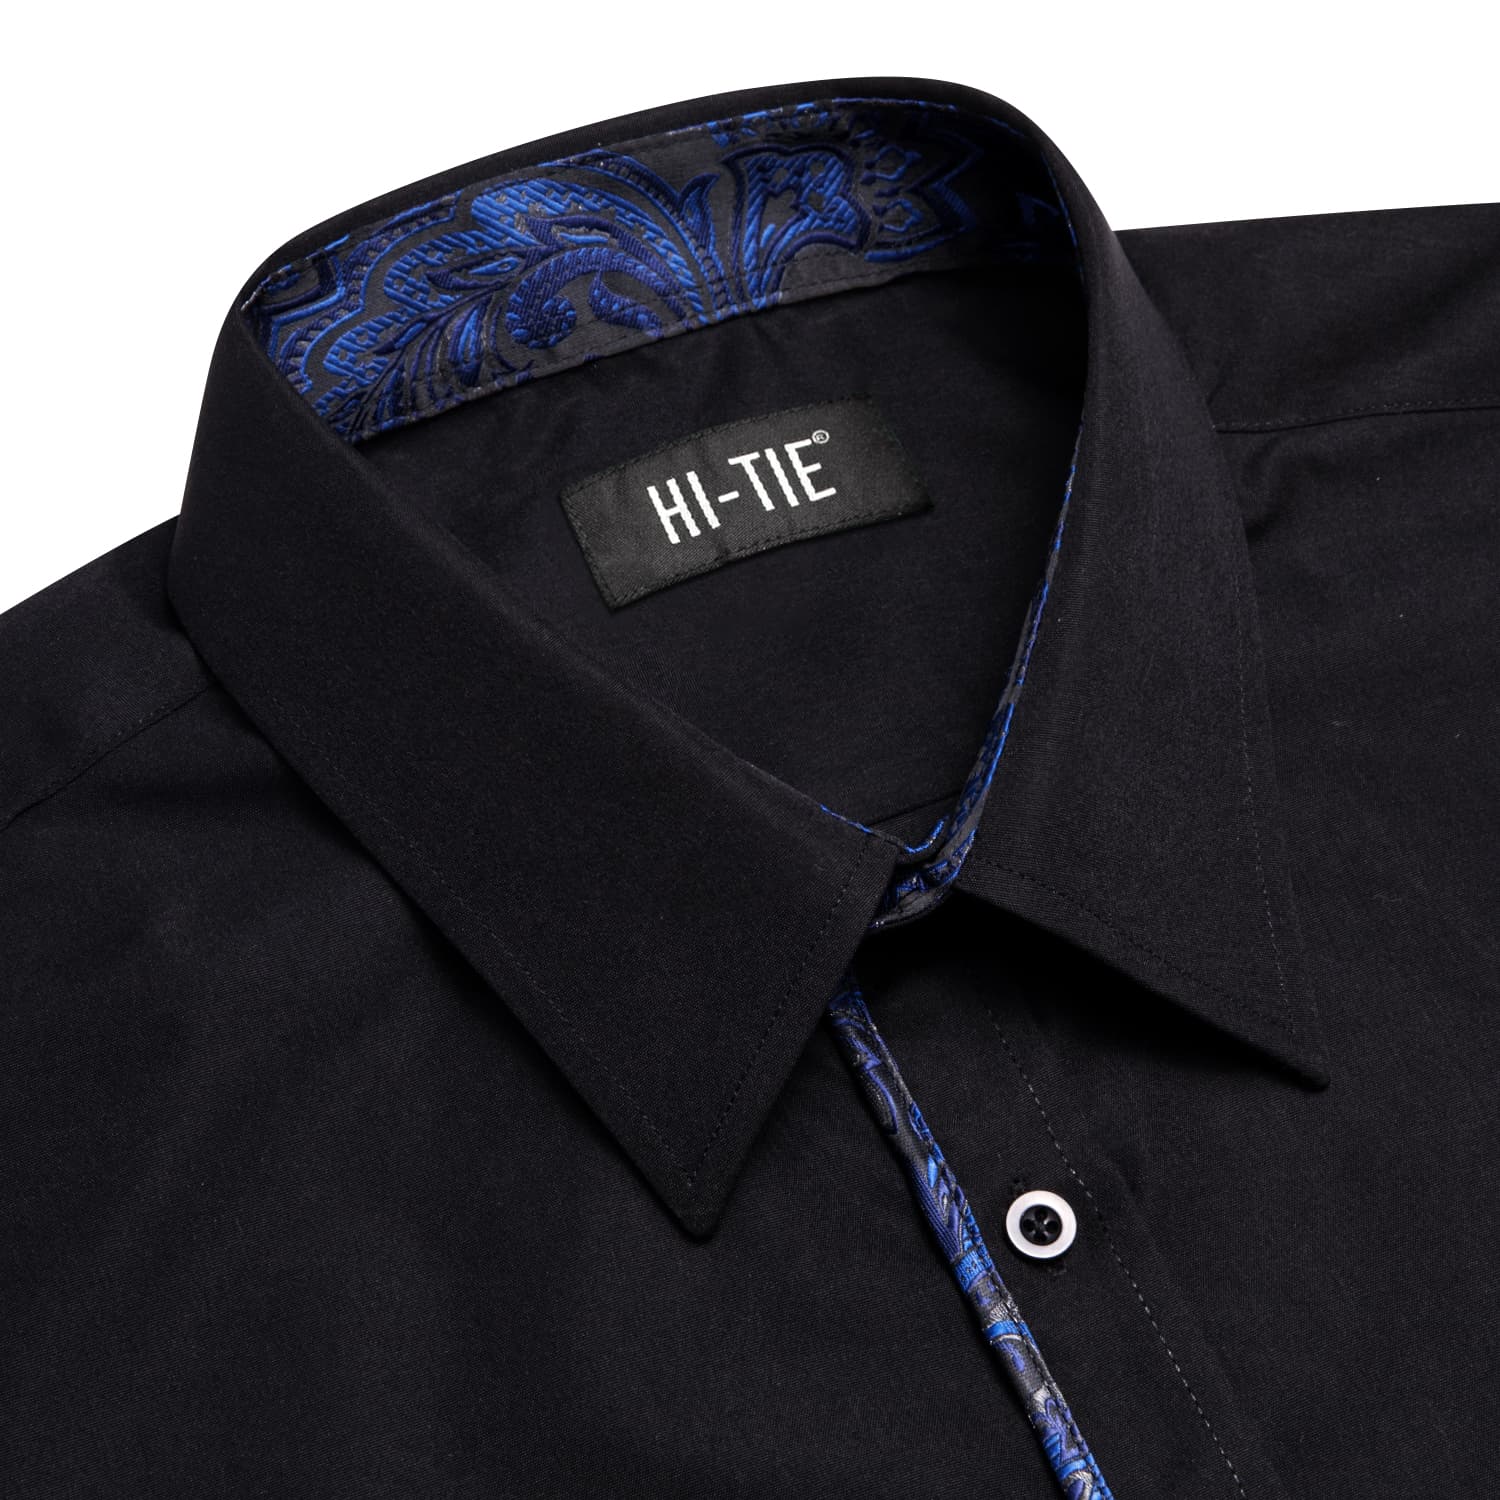 Hi-Tie Black Shirt with Blue Jacquard Collar Solid Shirt